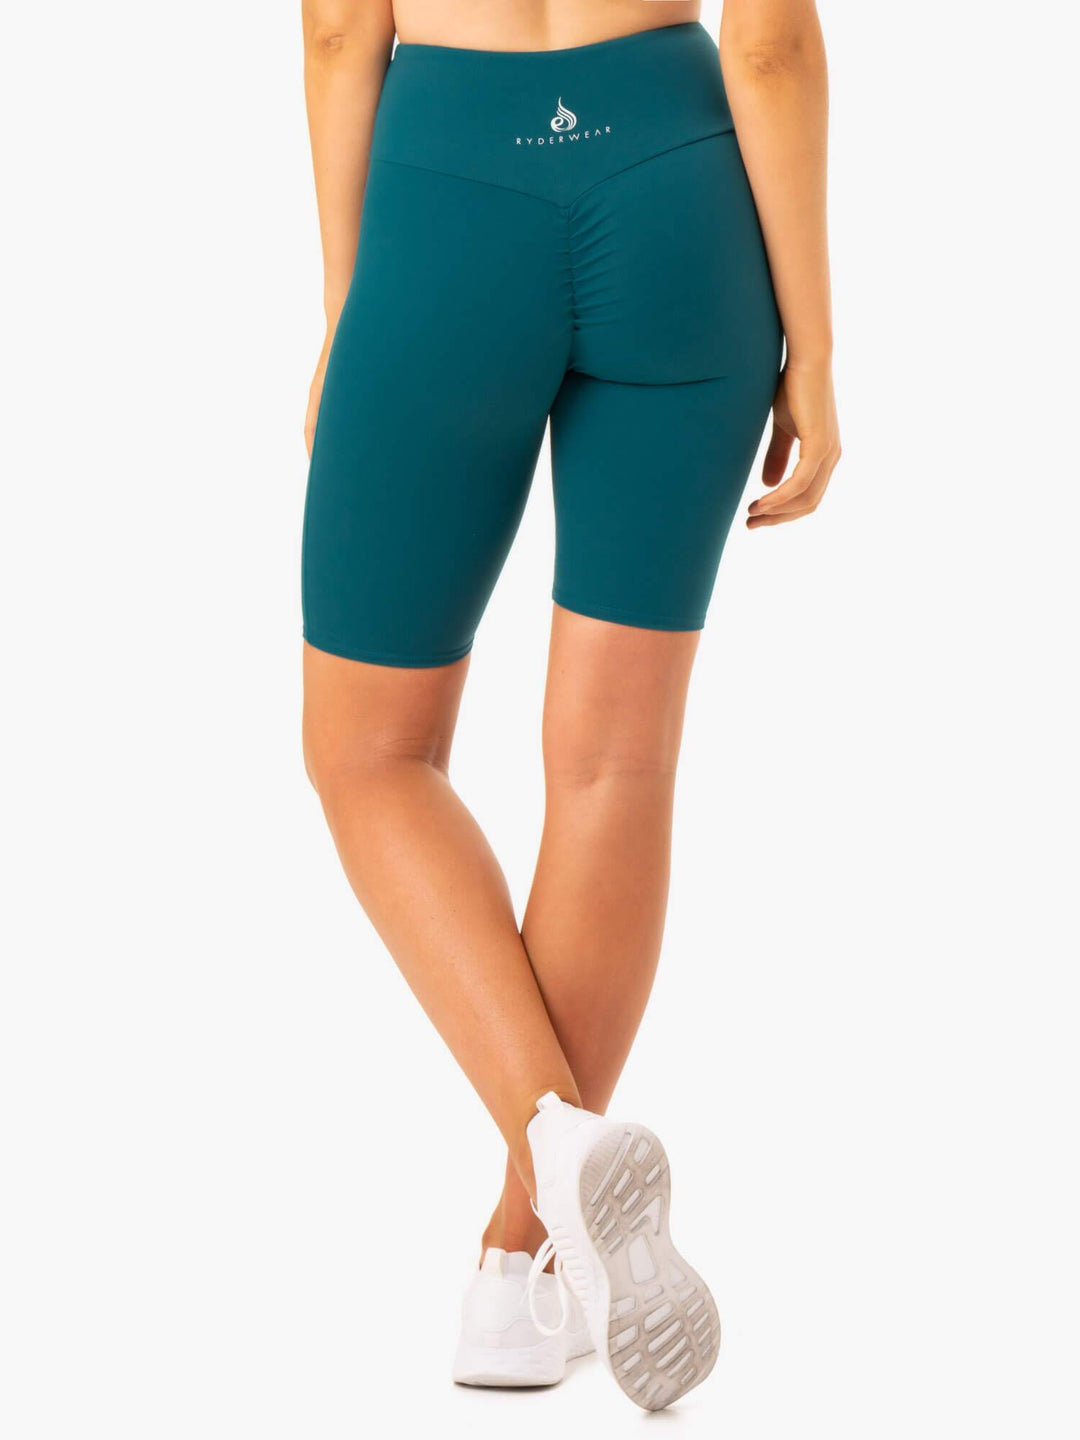 Staples Scrunch Bum Bike Shorts - Emerald Clothing Ryderwear 